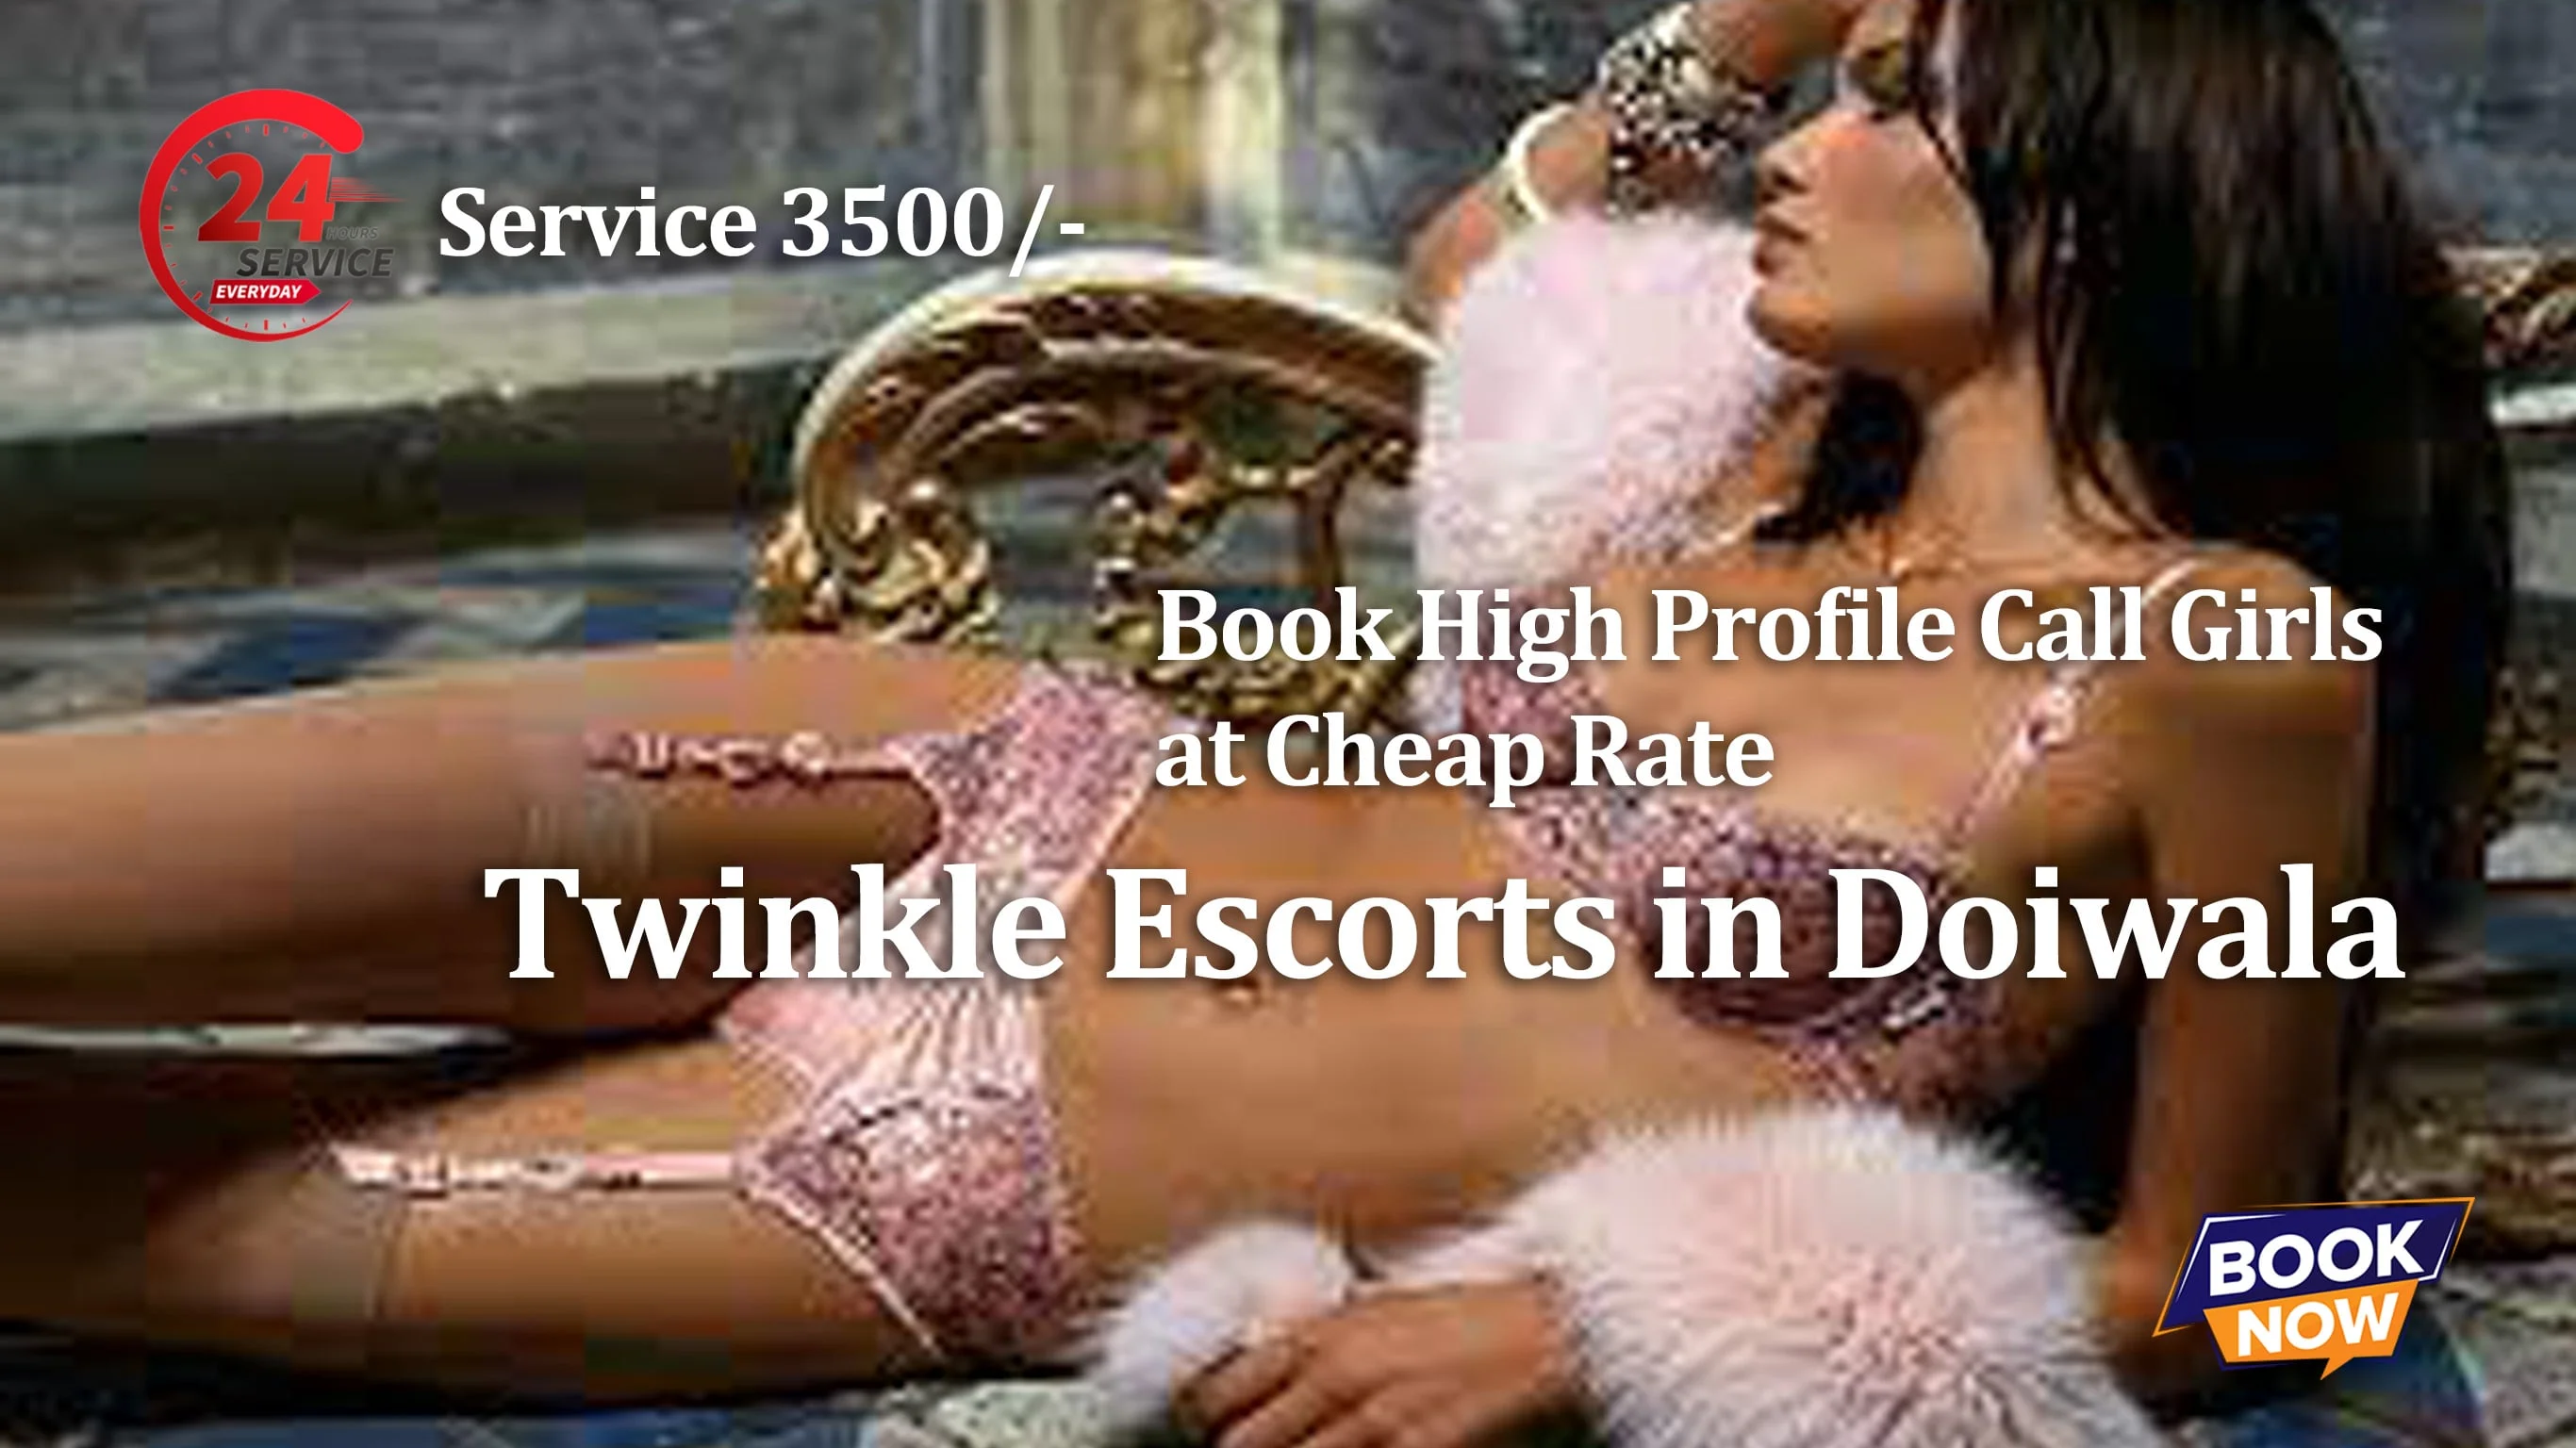 Doiwala Escort give description of twinkle escort service charges